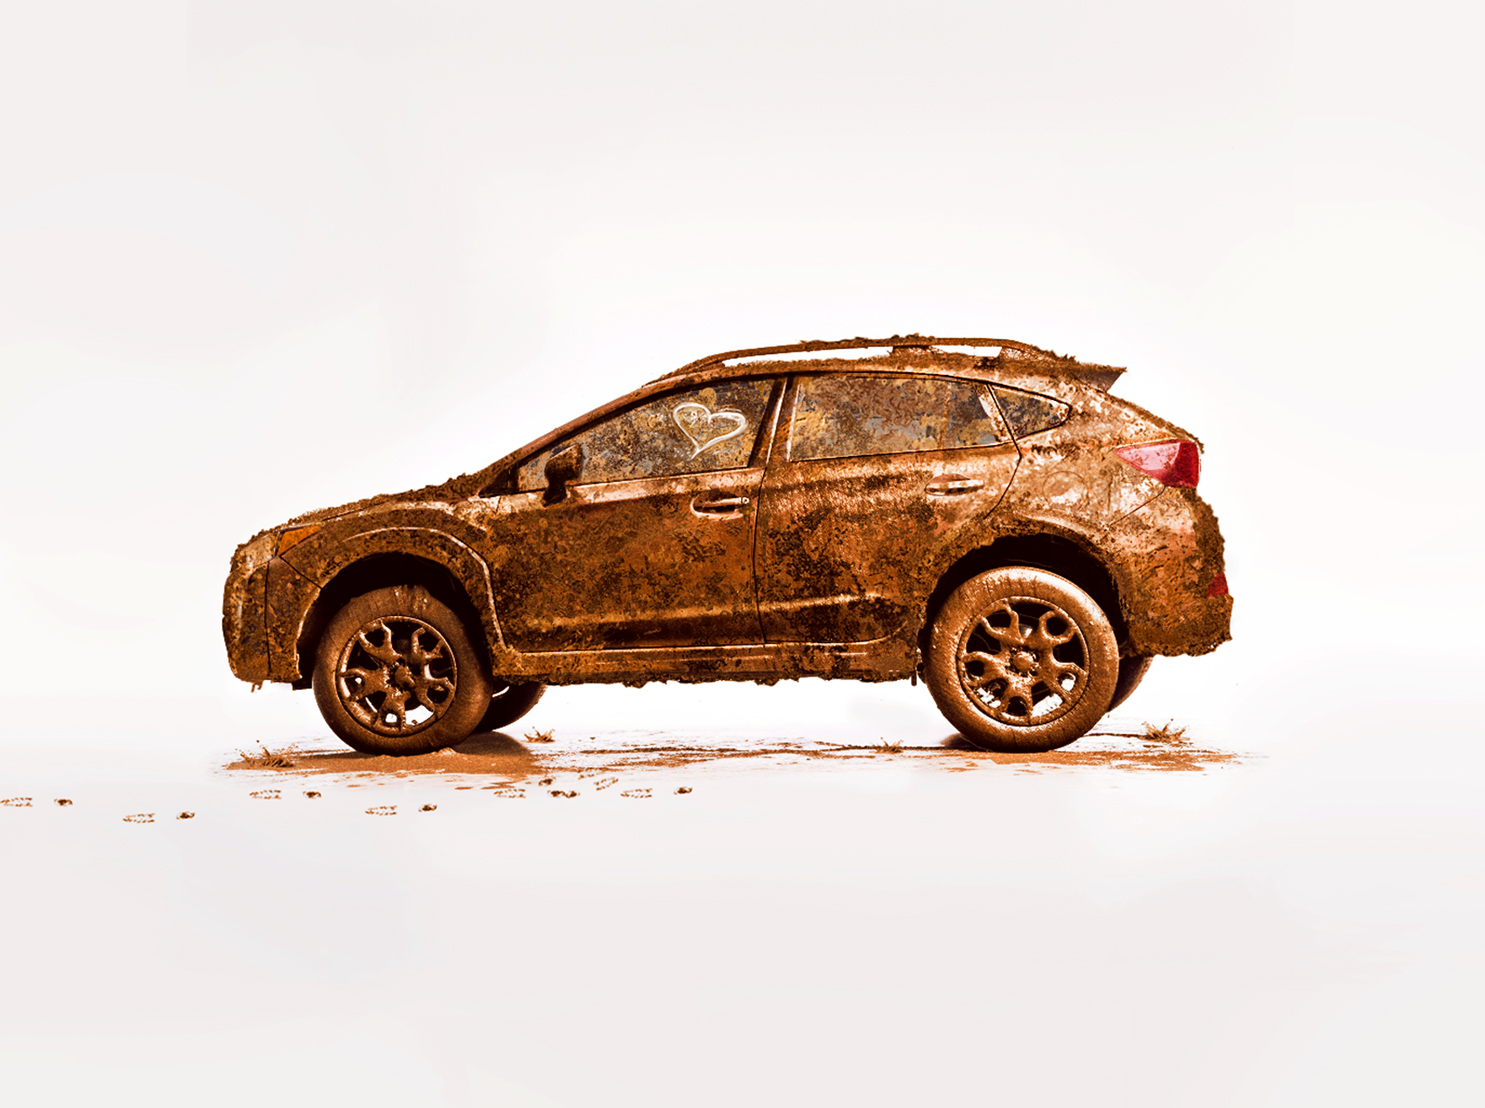 Muddy Subaru Love